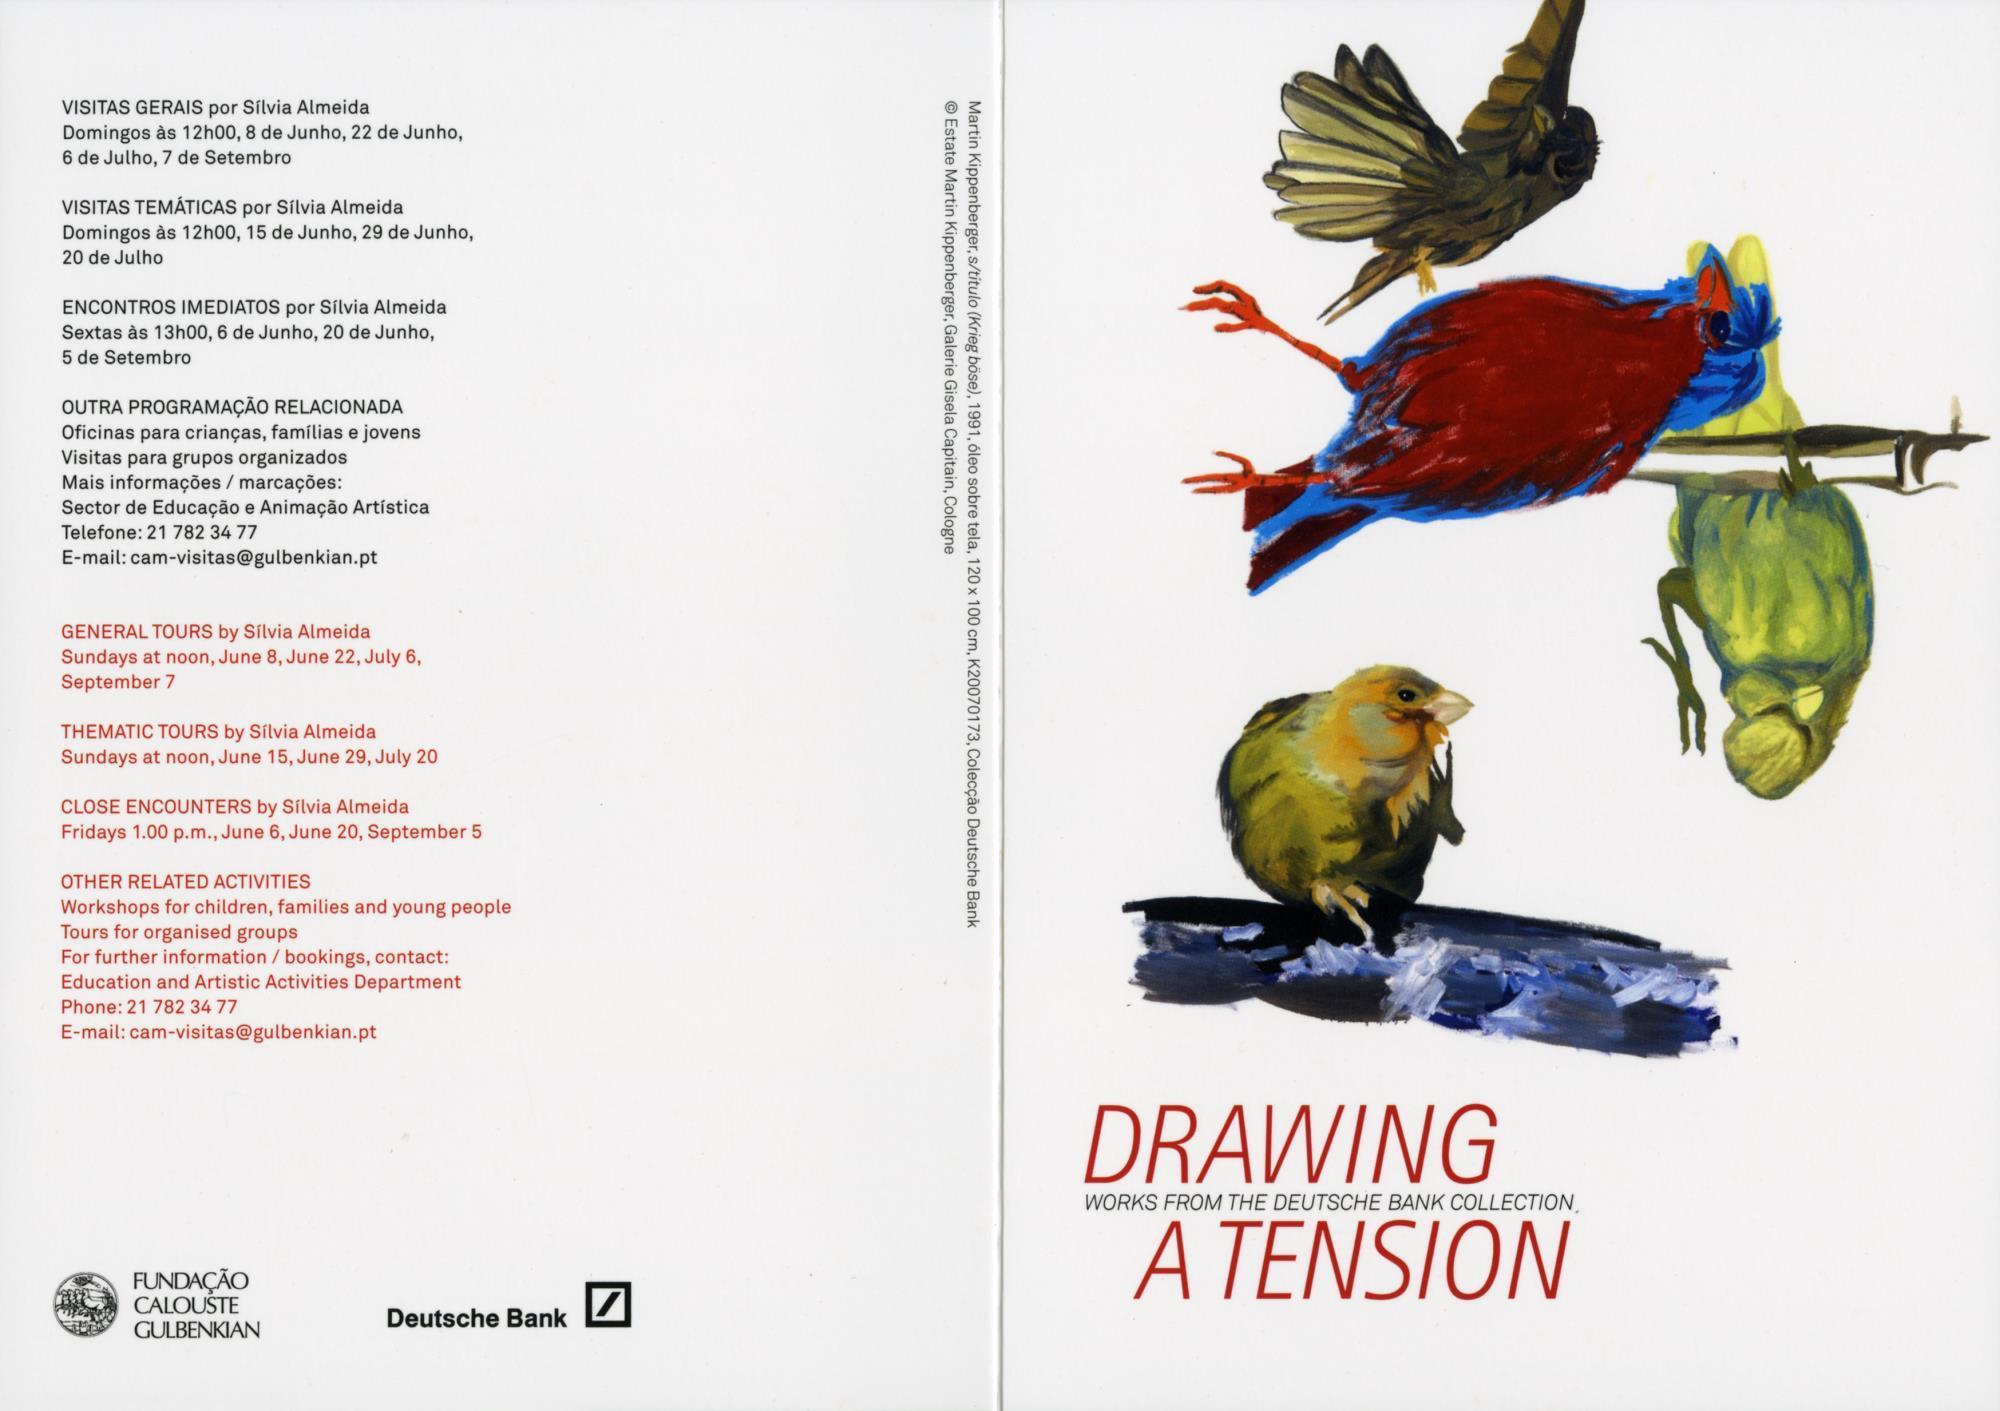 Drawing a Tension. Obras da Colecção Deutsche Bank